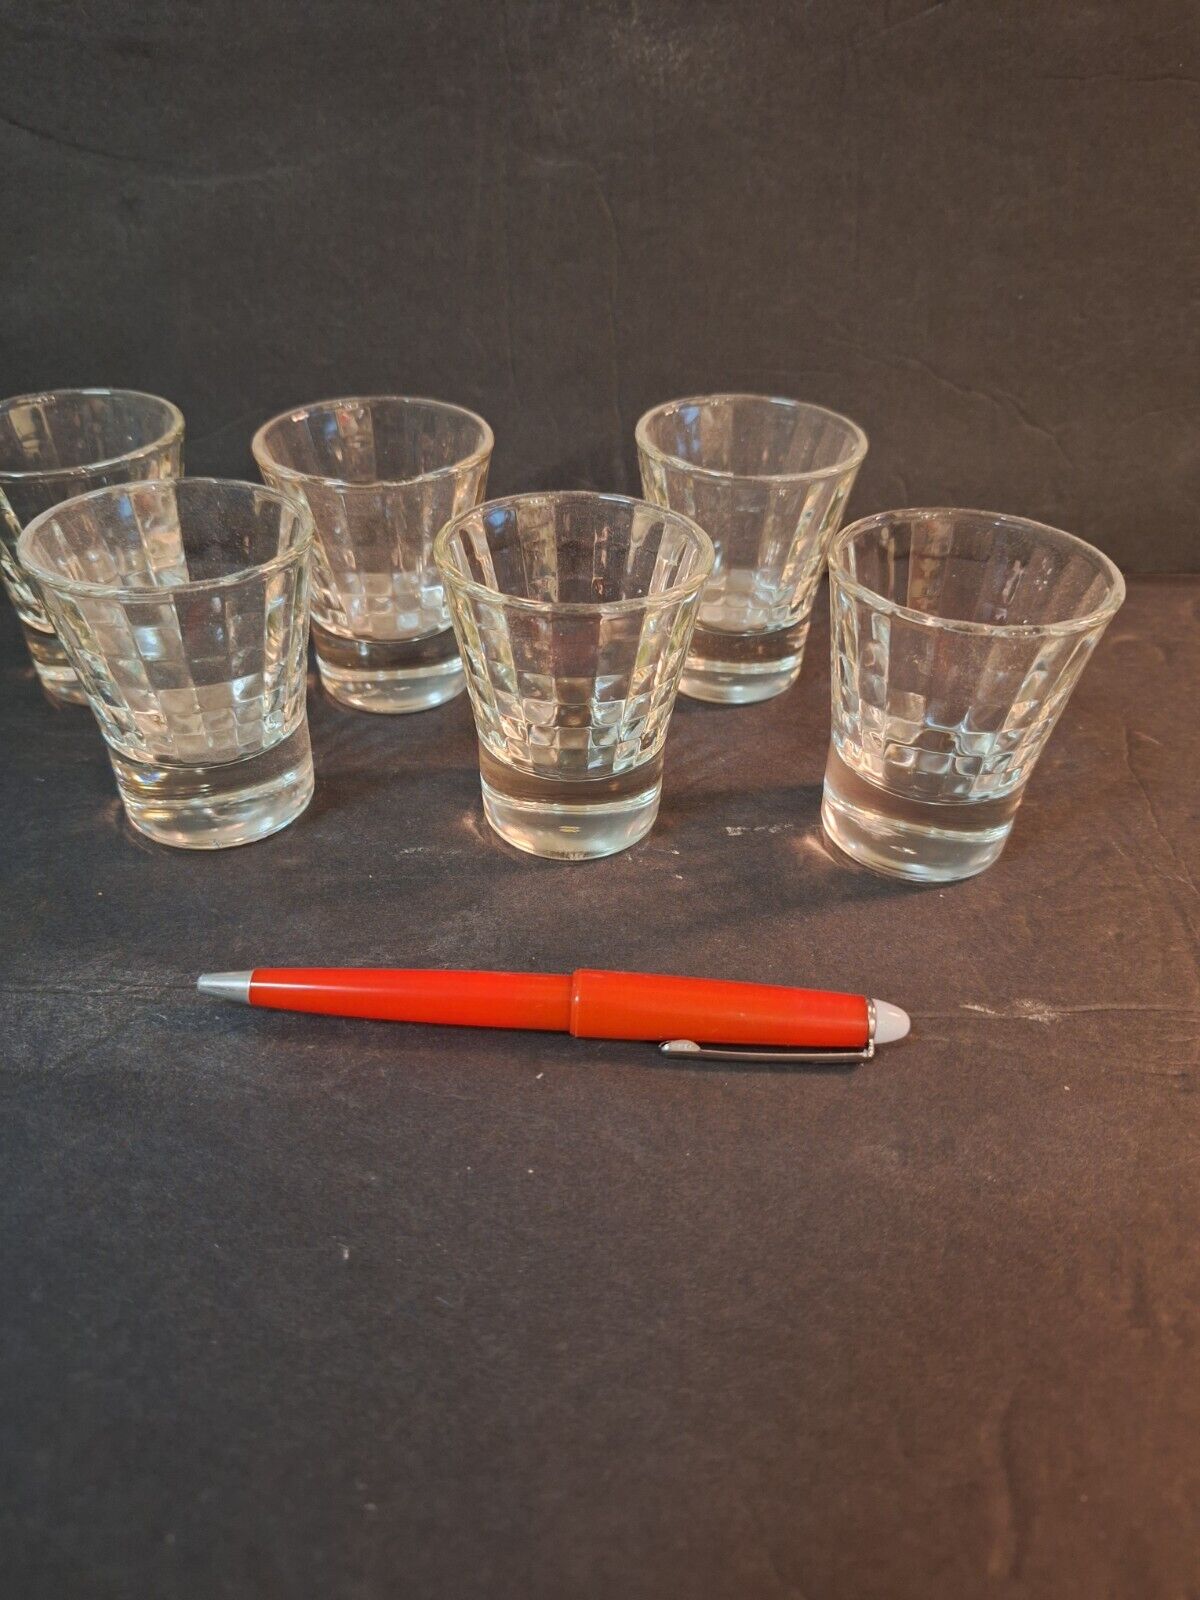 6 Vintage Crystal Paneled Shot Glasses 2 oz. Capacity